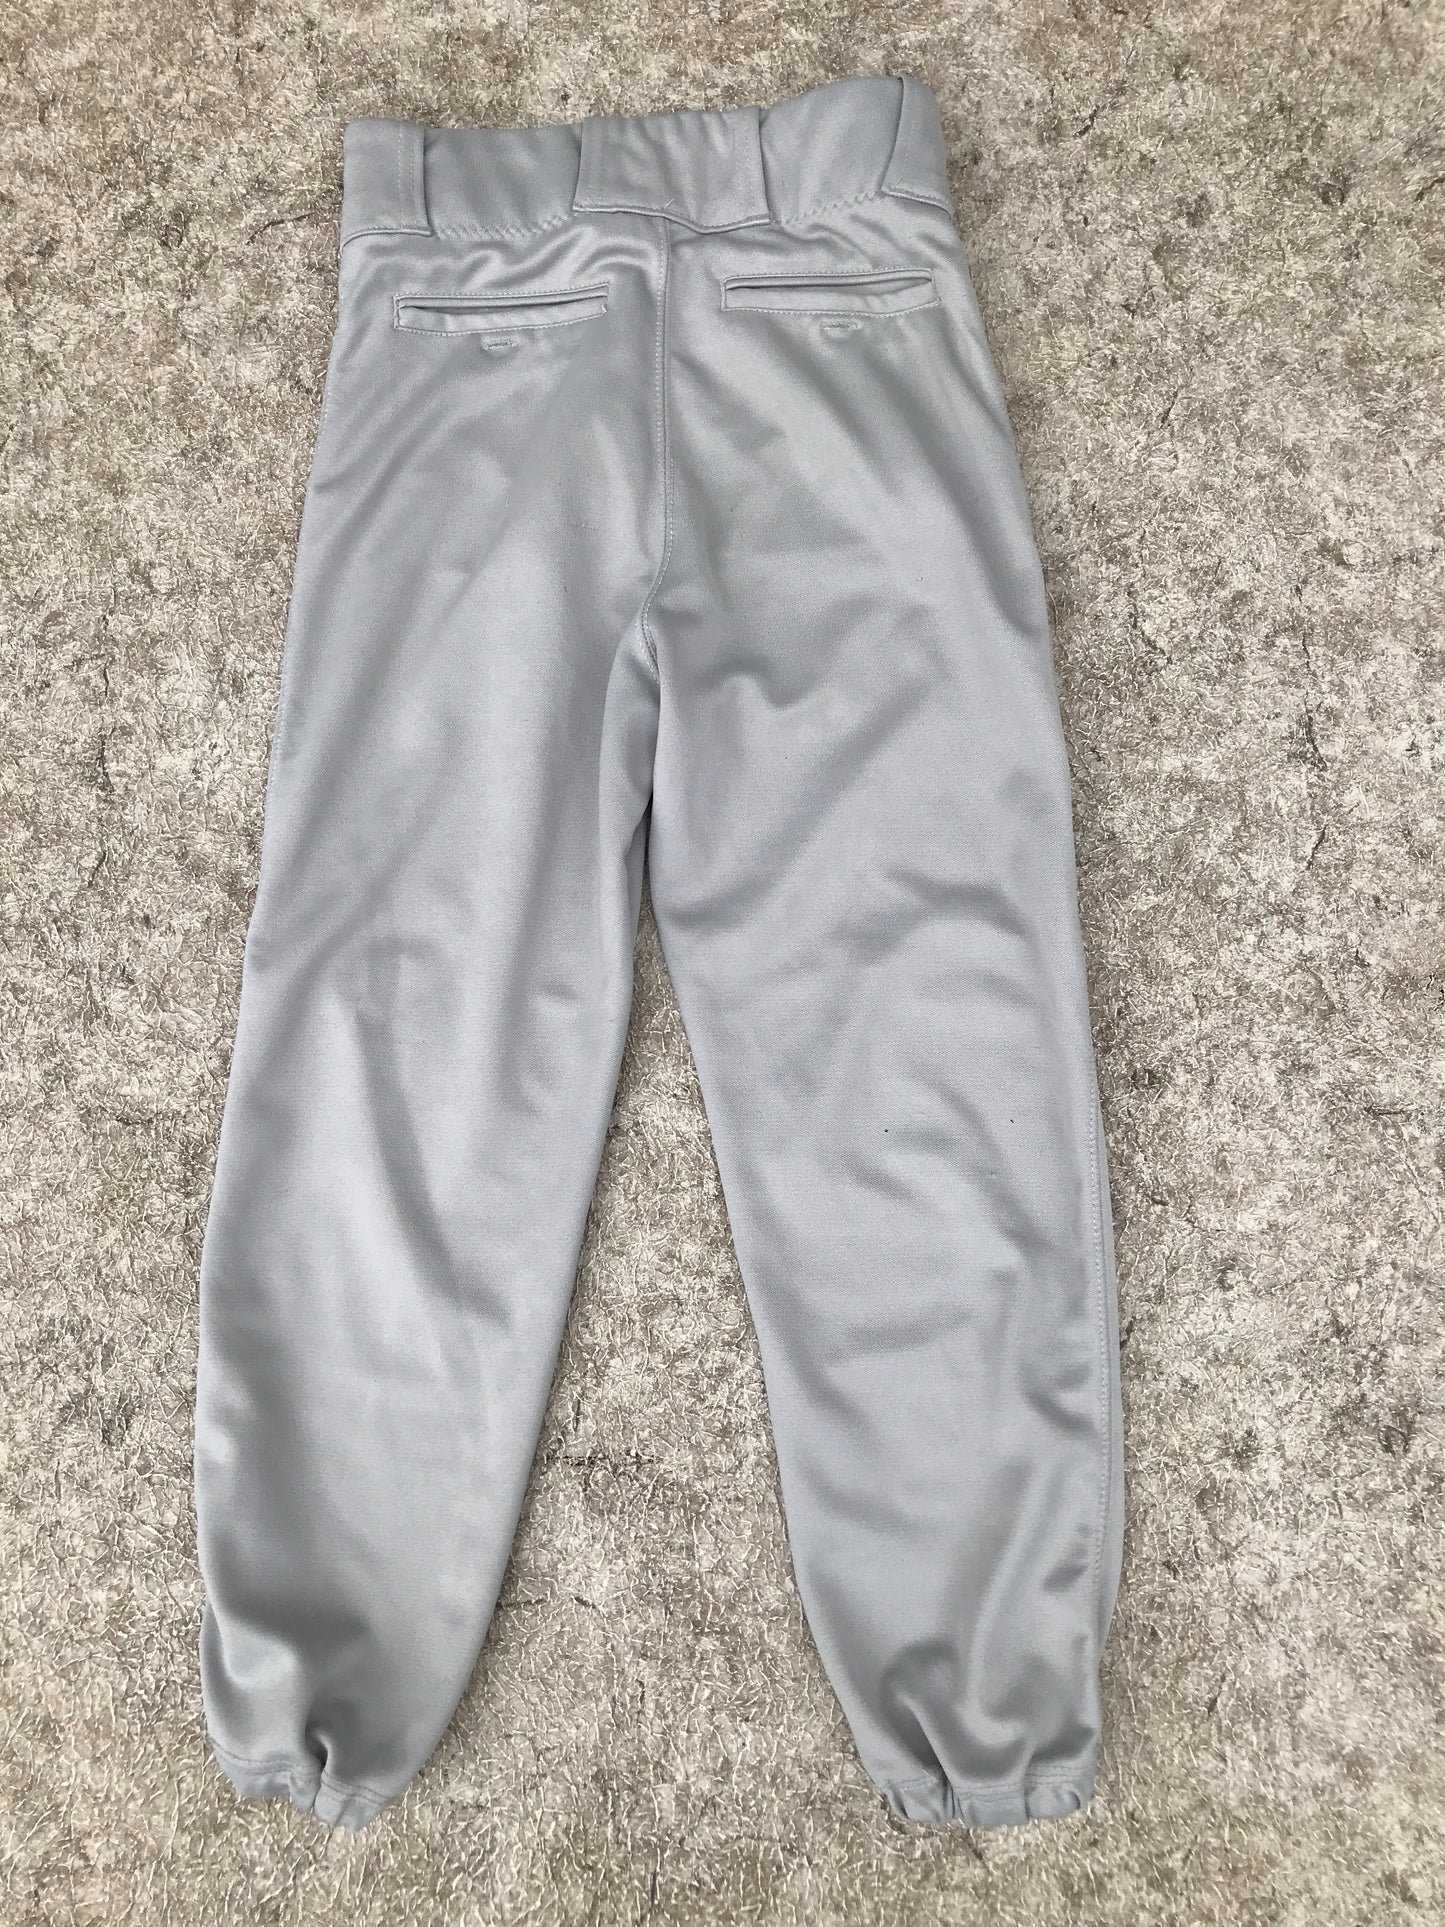 Baseball Pants Child Size Youth 10-12 Grey